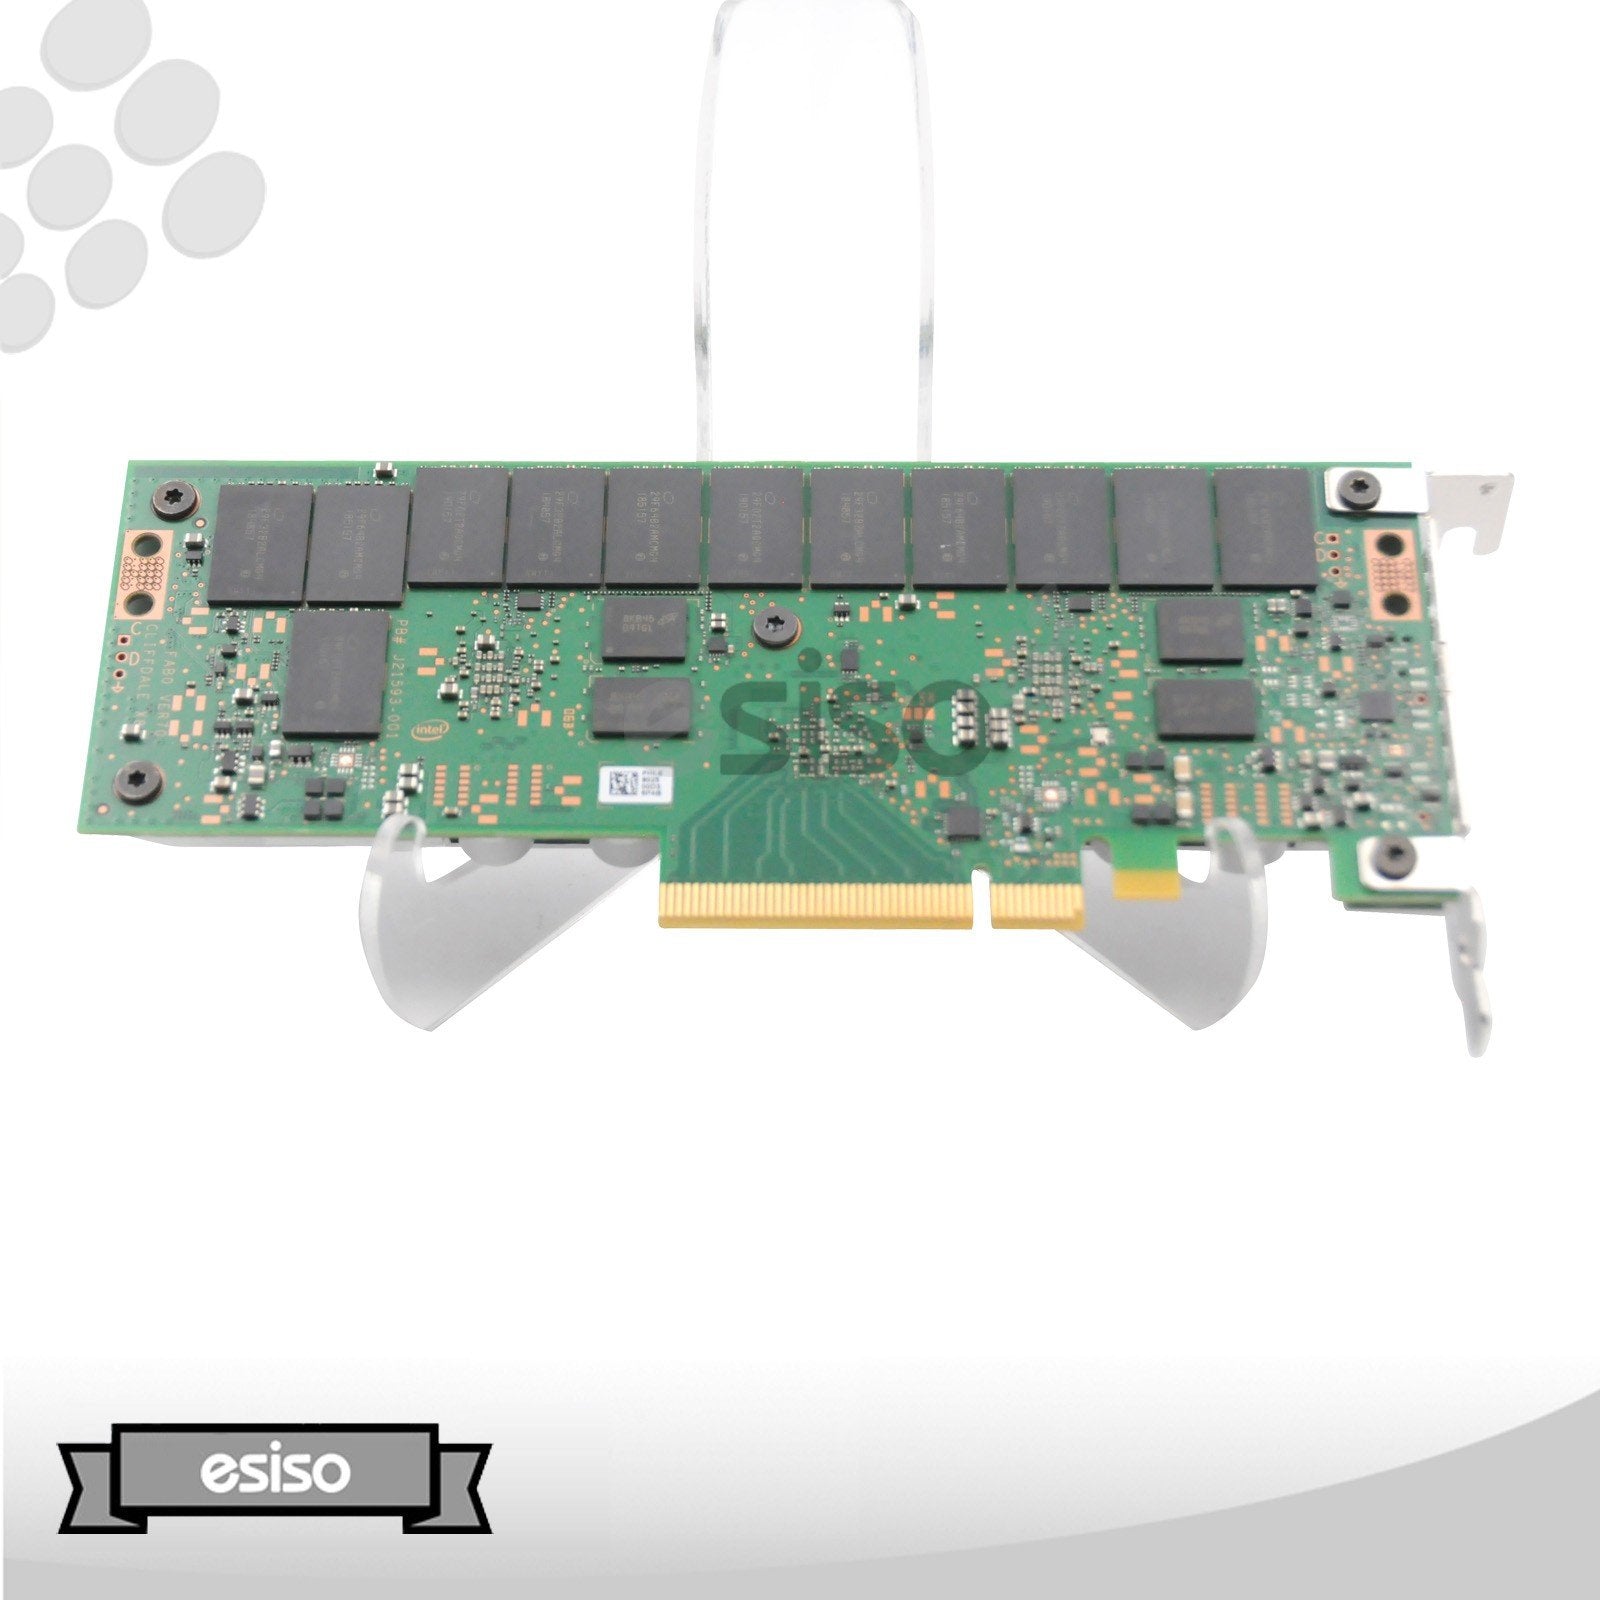 SSDPECKE064T7S INTEL 6.4TB MLC NVME PCIE HH-HL DC P4608 SERIES SOLID STATE DRIVE